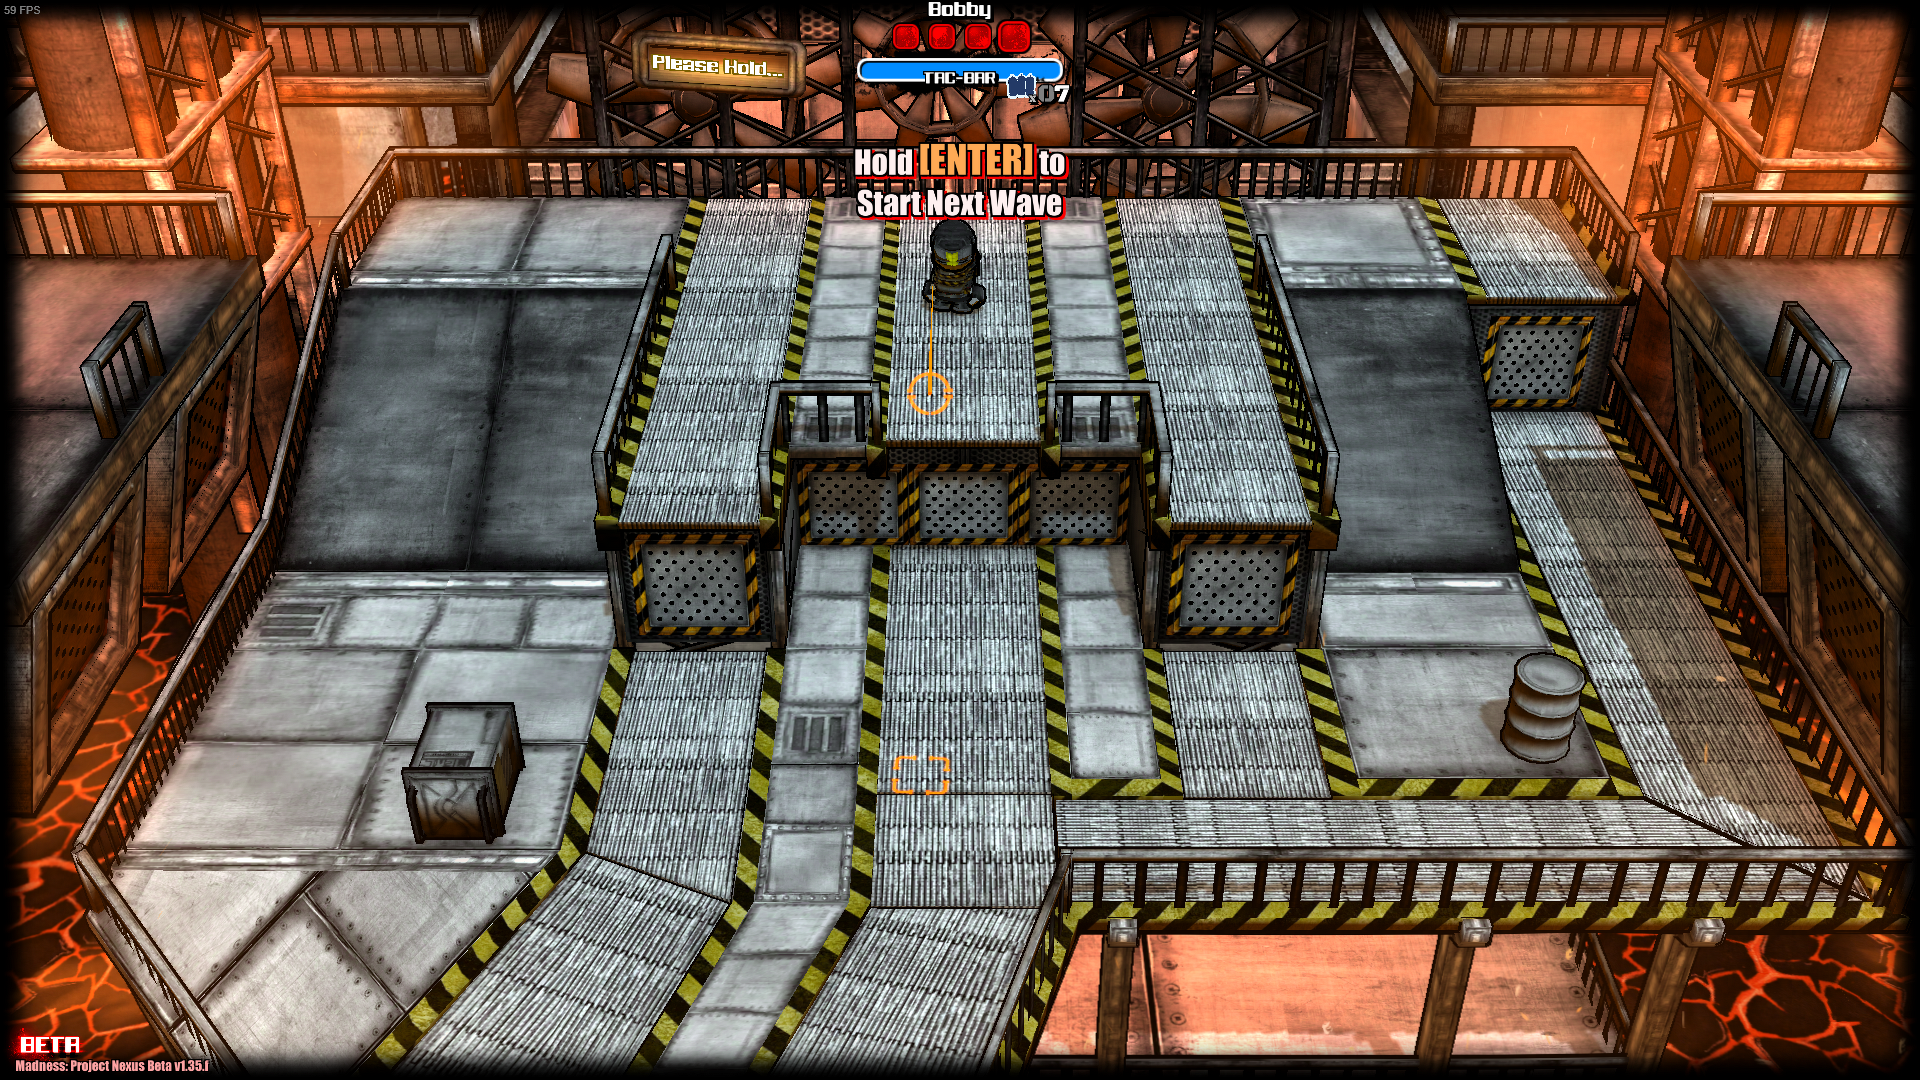 Combat Arena (Madness: Project Nexus) 2012 vs 2021 